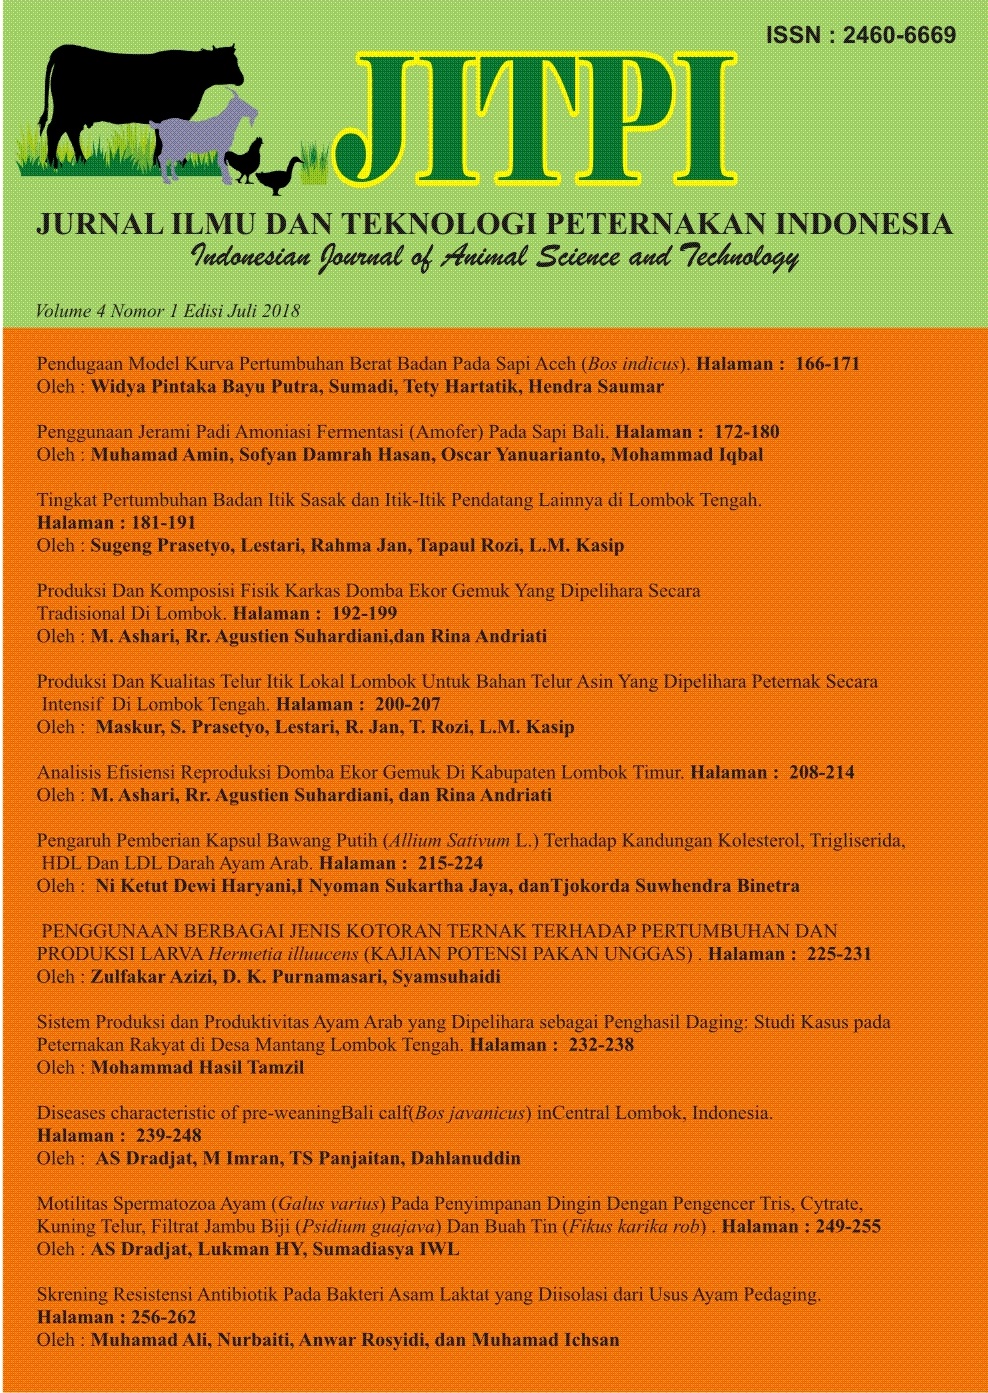 JURNAL ILMU DAN TEKNOLOGI PETERNAKAN INDONESIA Vol 3 2018/ Indonesian Journal of Animal Science and Technology Vol 3 2018